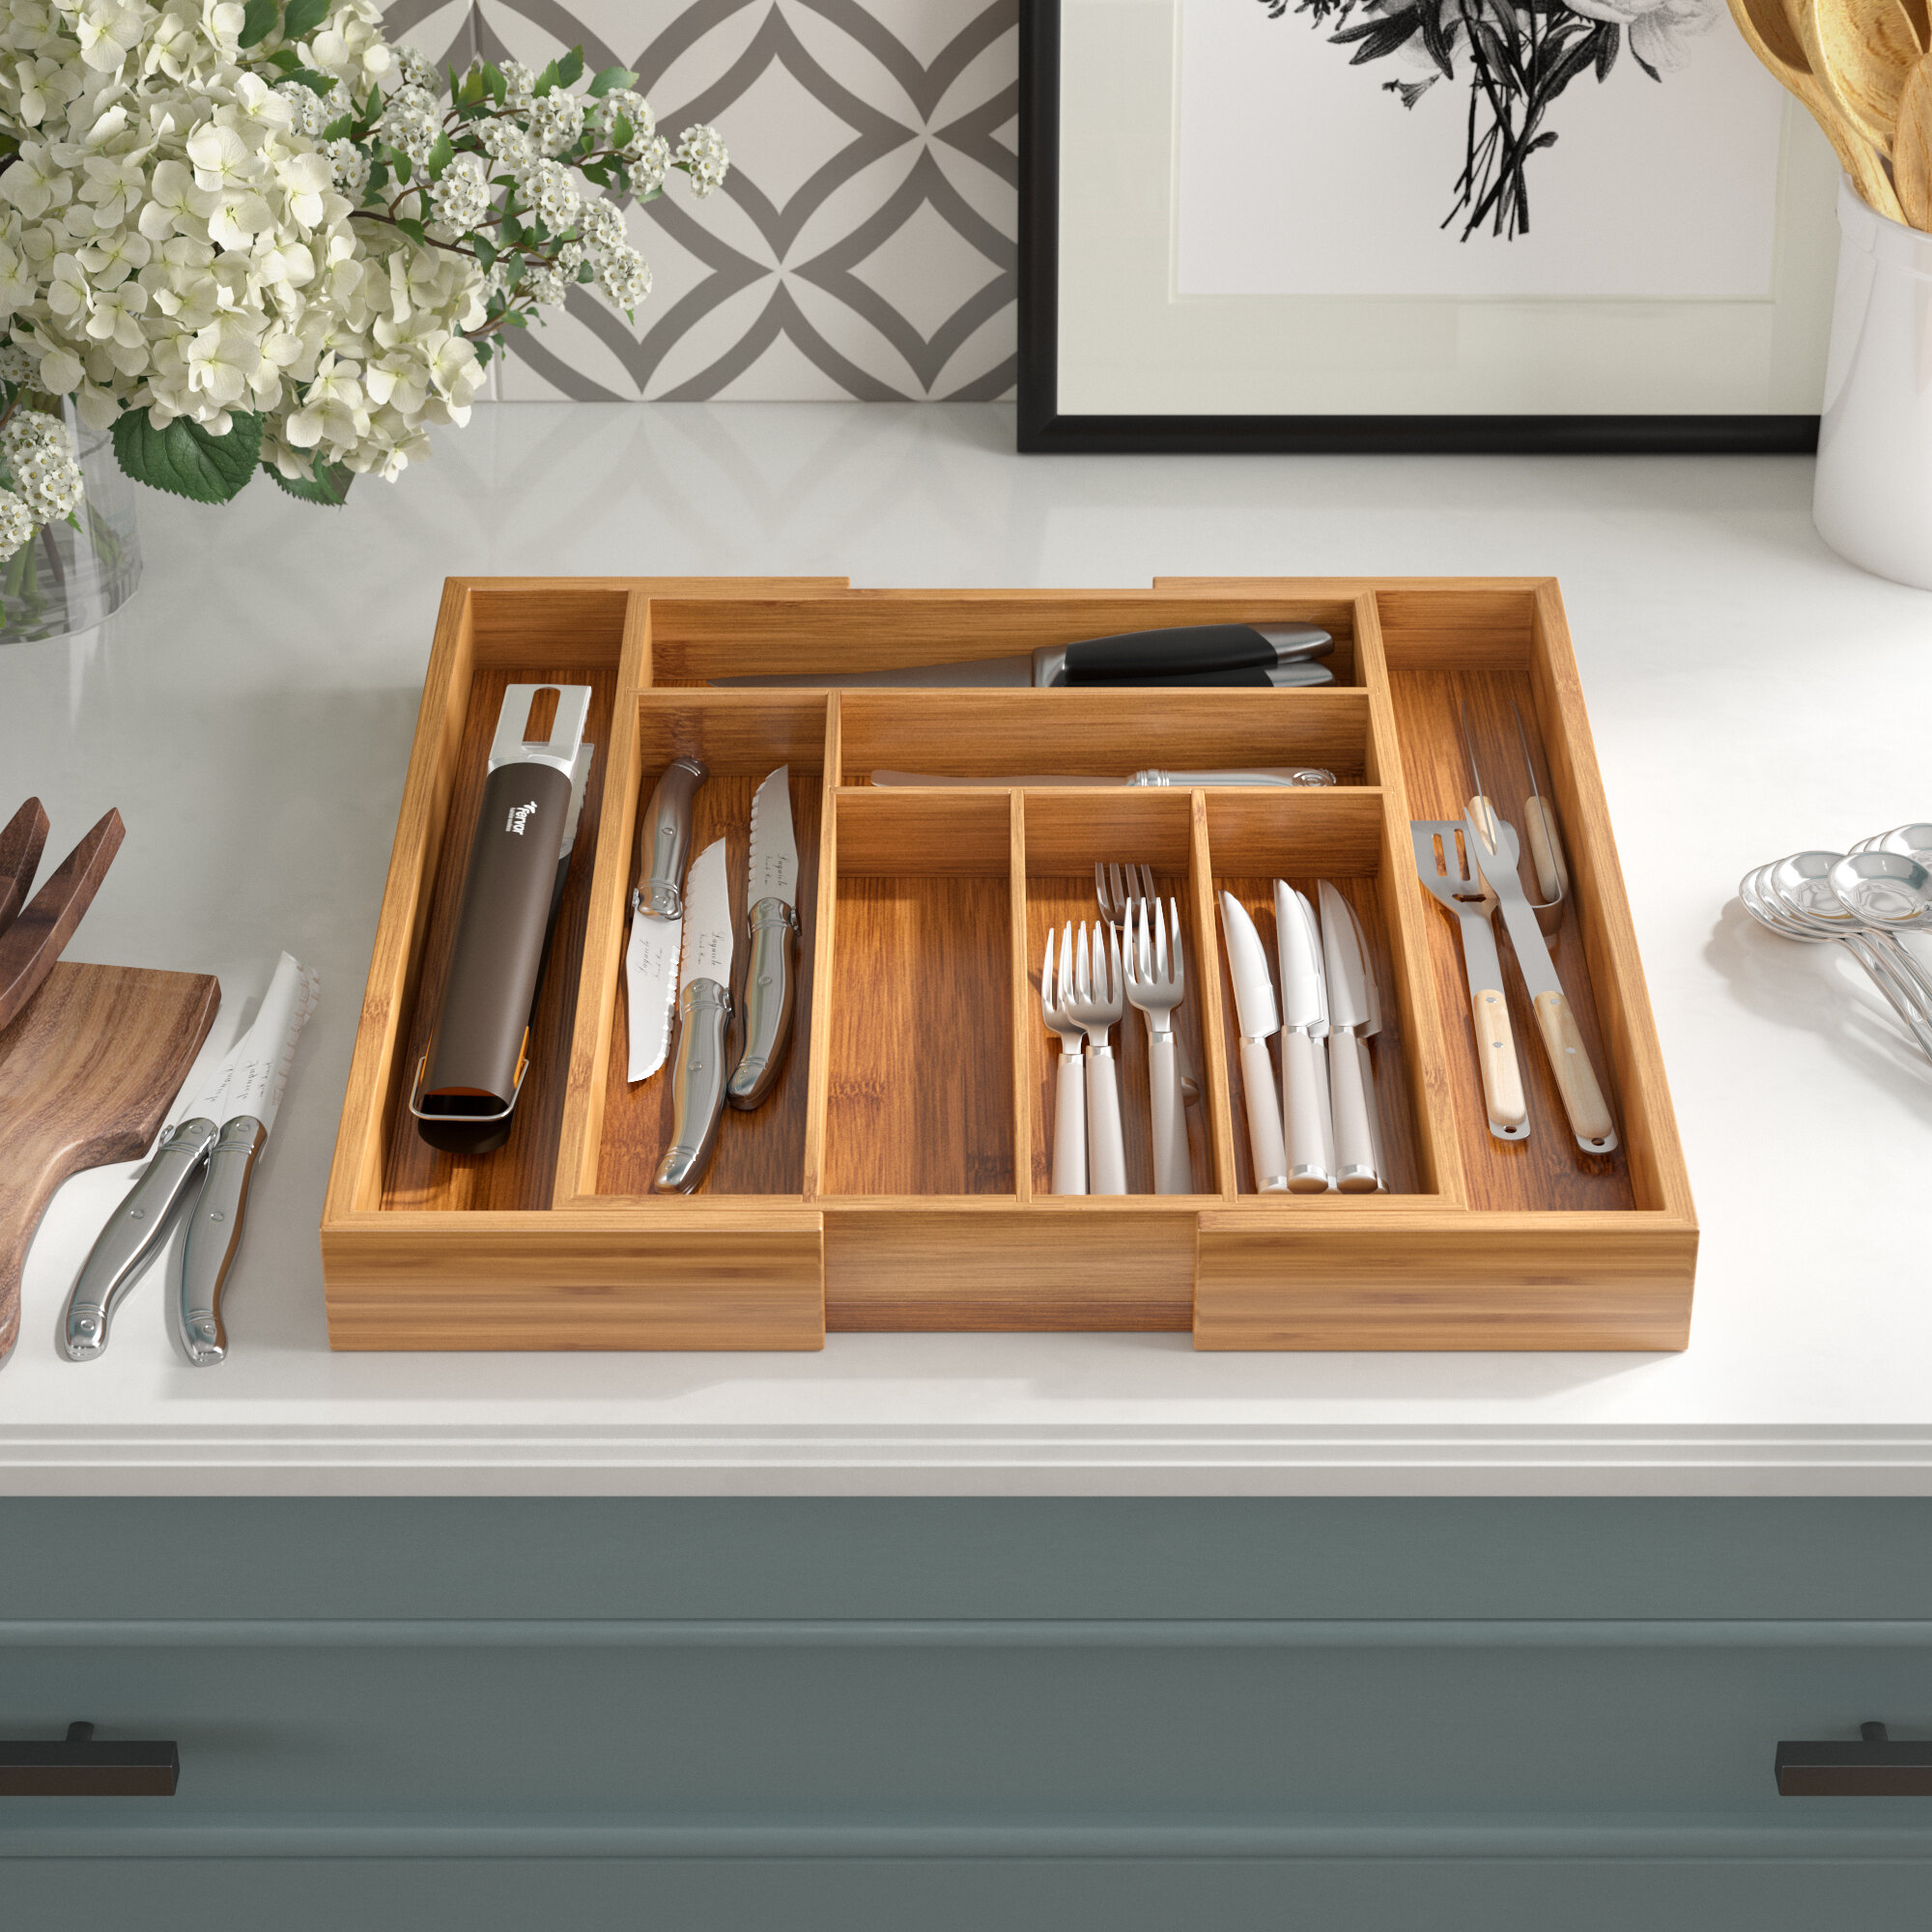 Beech Wood Wooden Lined Cutlery Drawer Tray Organizer Kitchen Utensil Holder 